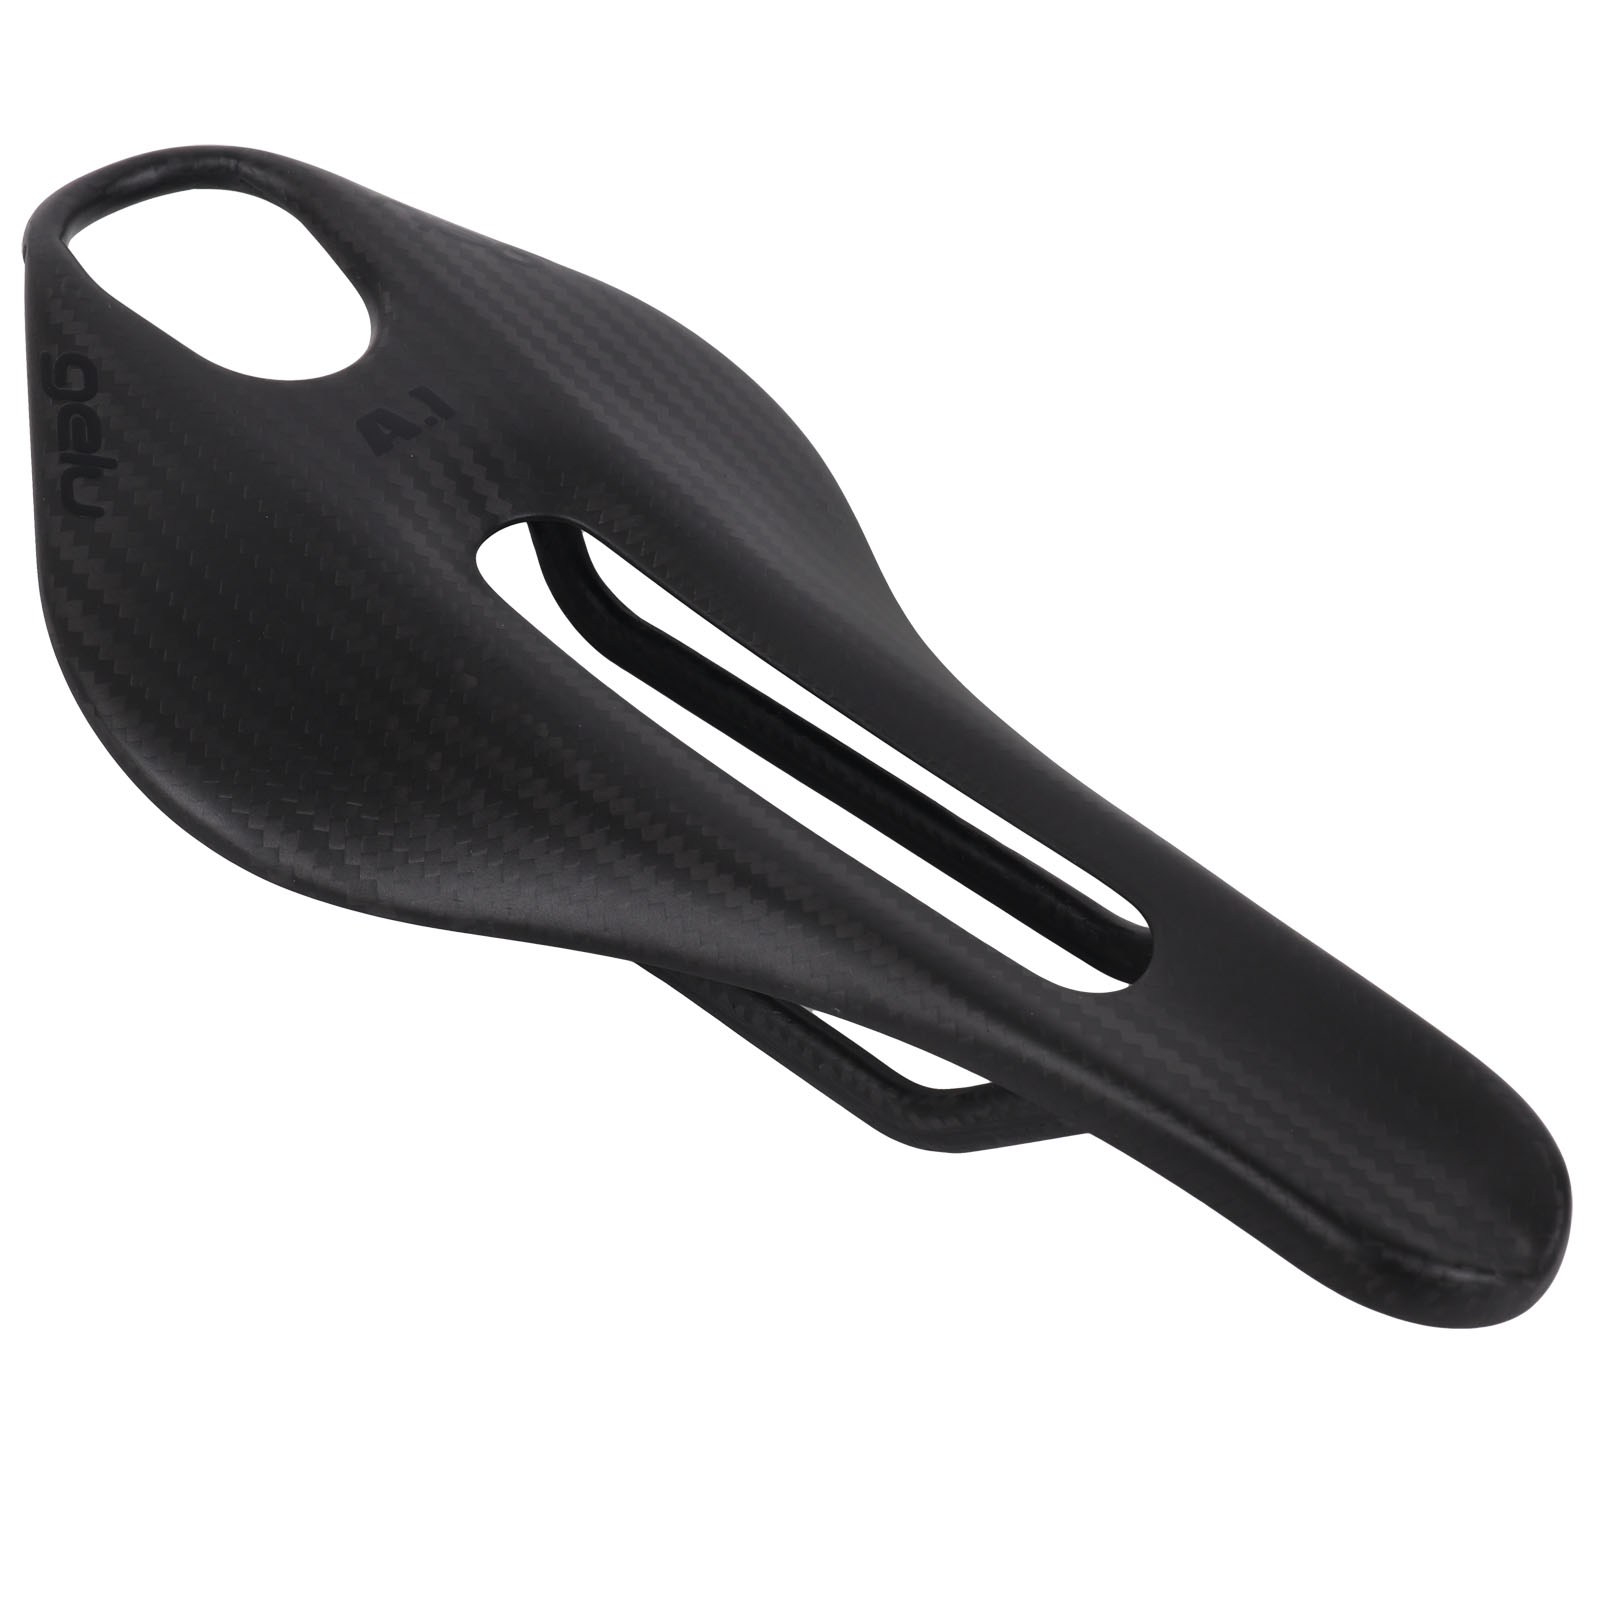 Productfoto van Gelu A1 Carbon Saddle - black decals